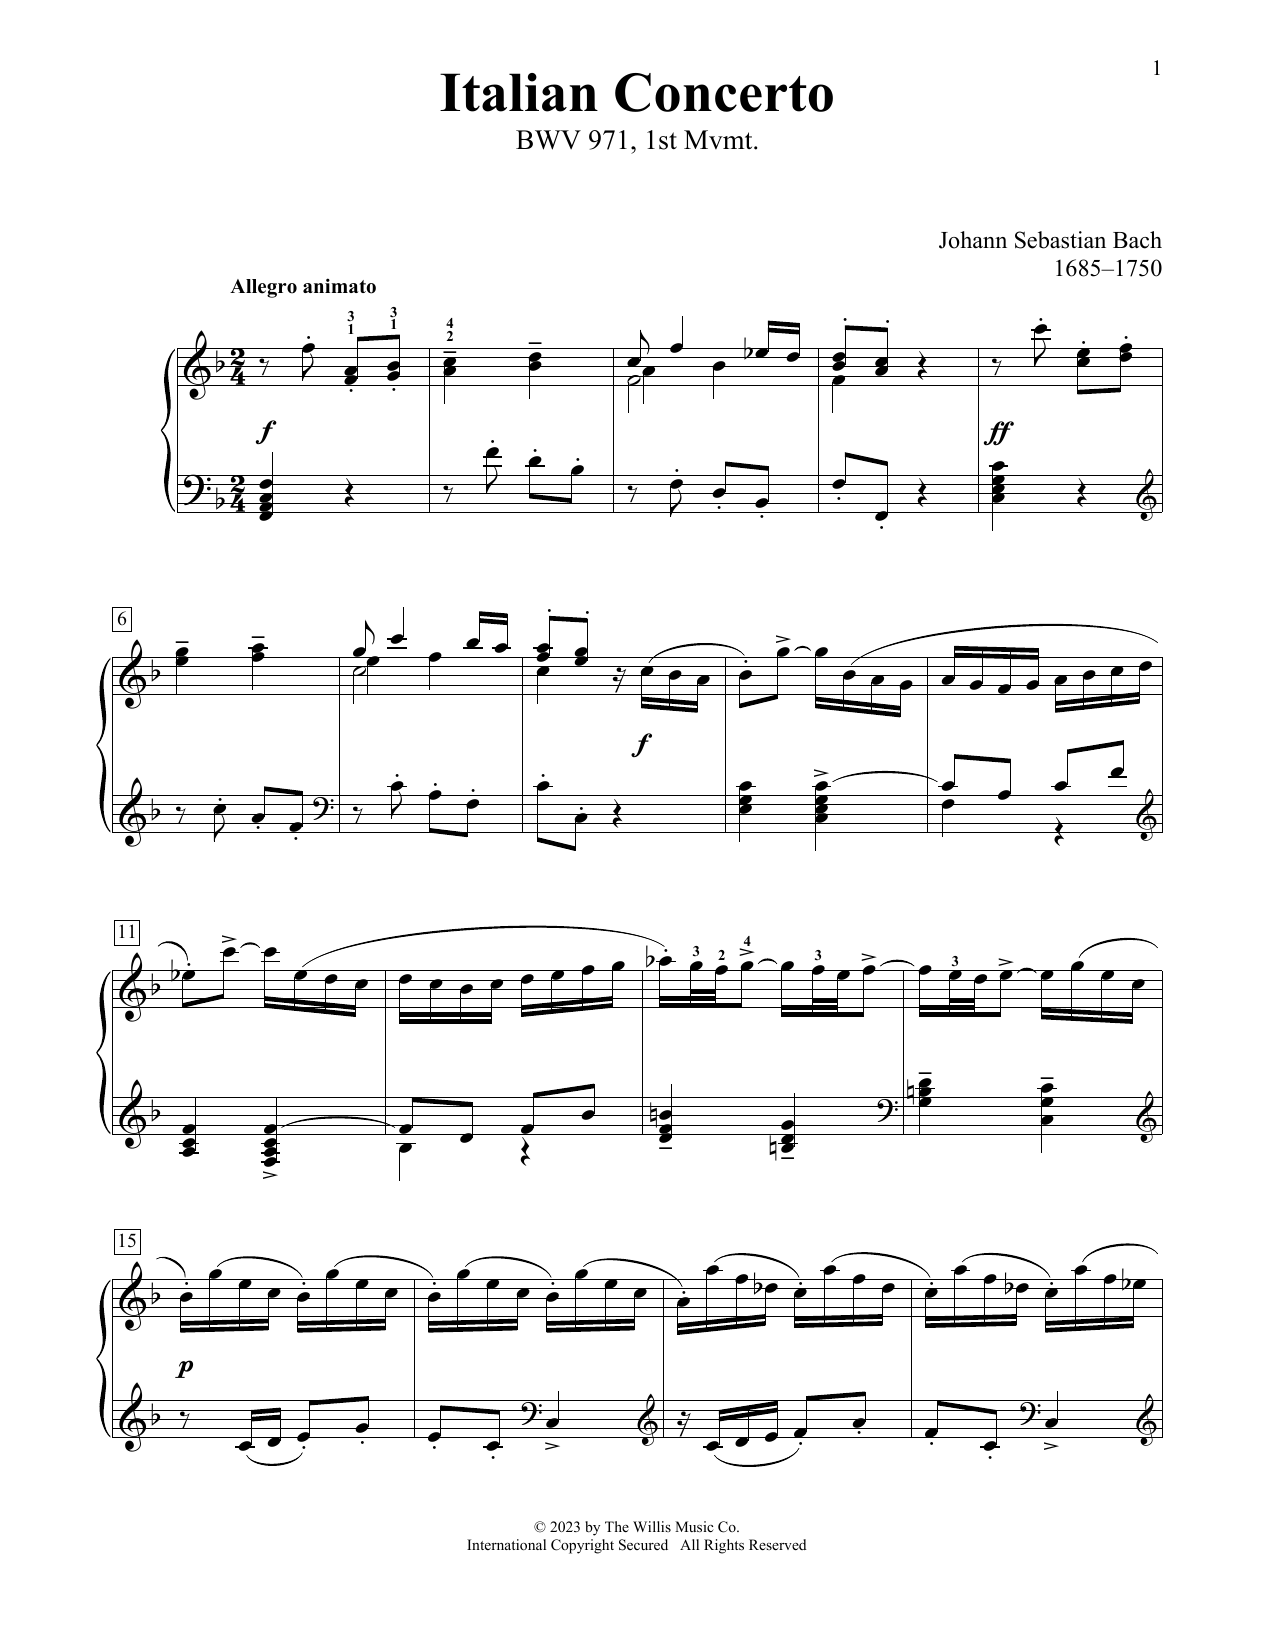 Johann Sebastian Bach Italian Concerto In F Major, BWV 971 sheet music notes printable PDF score